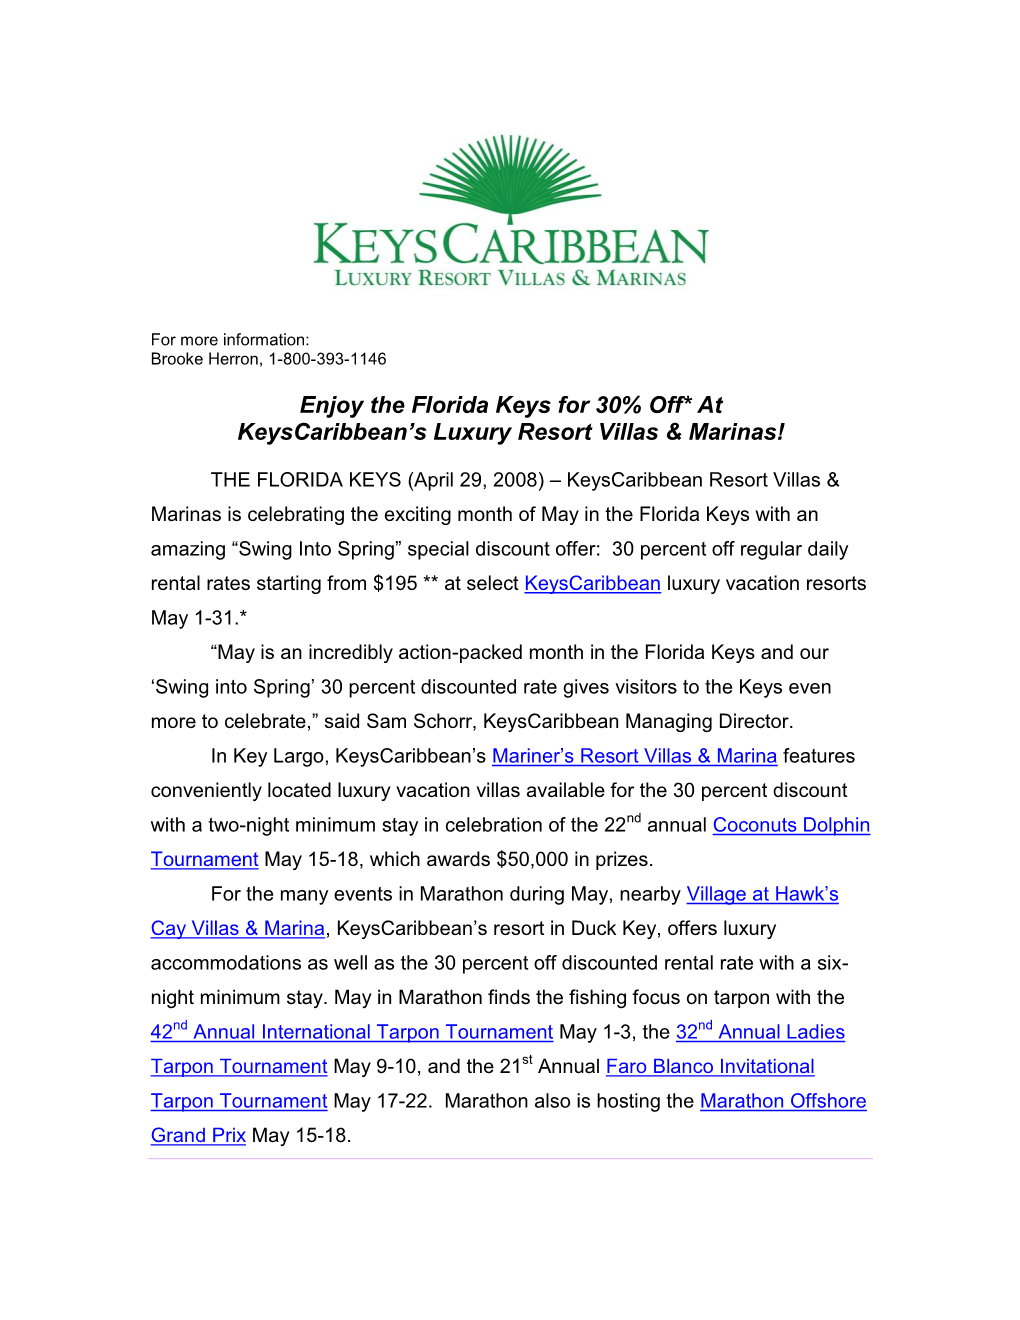 Enjoy the Florida Keys for 30% Off* at Keyscaribbean's Luxury Resort